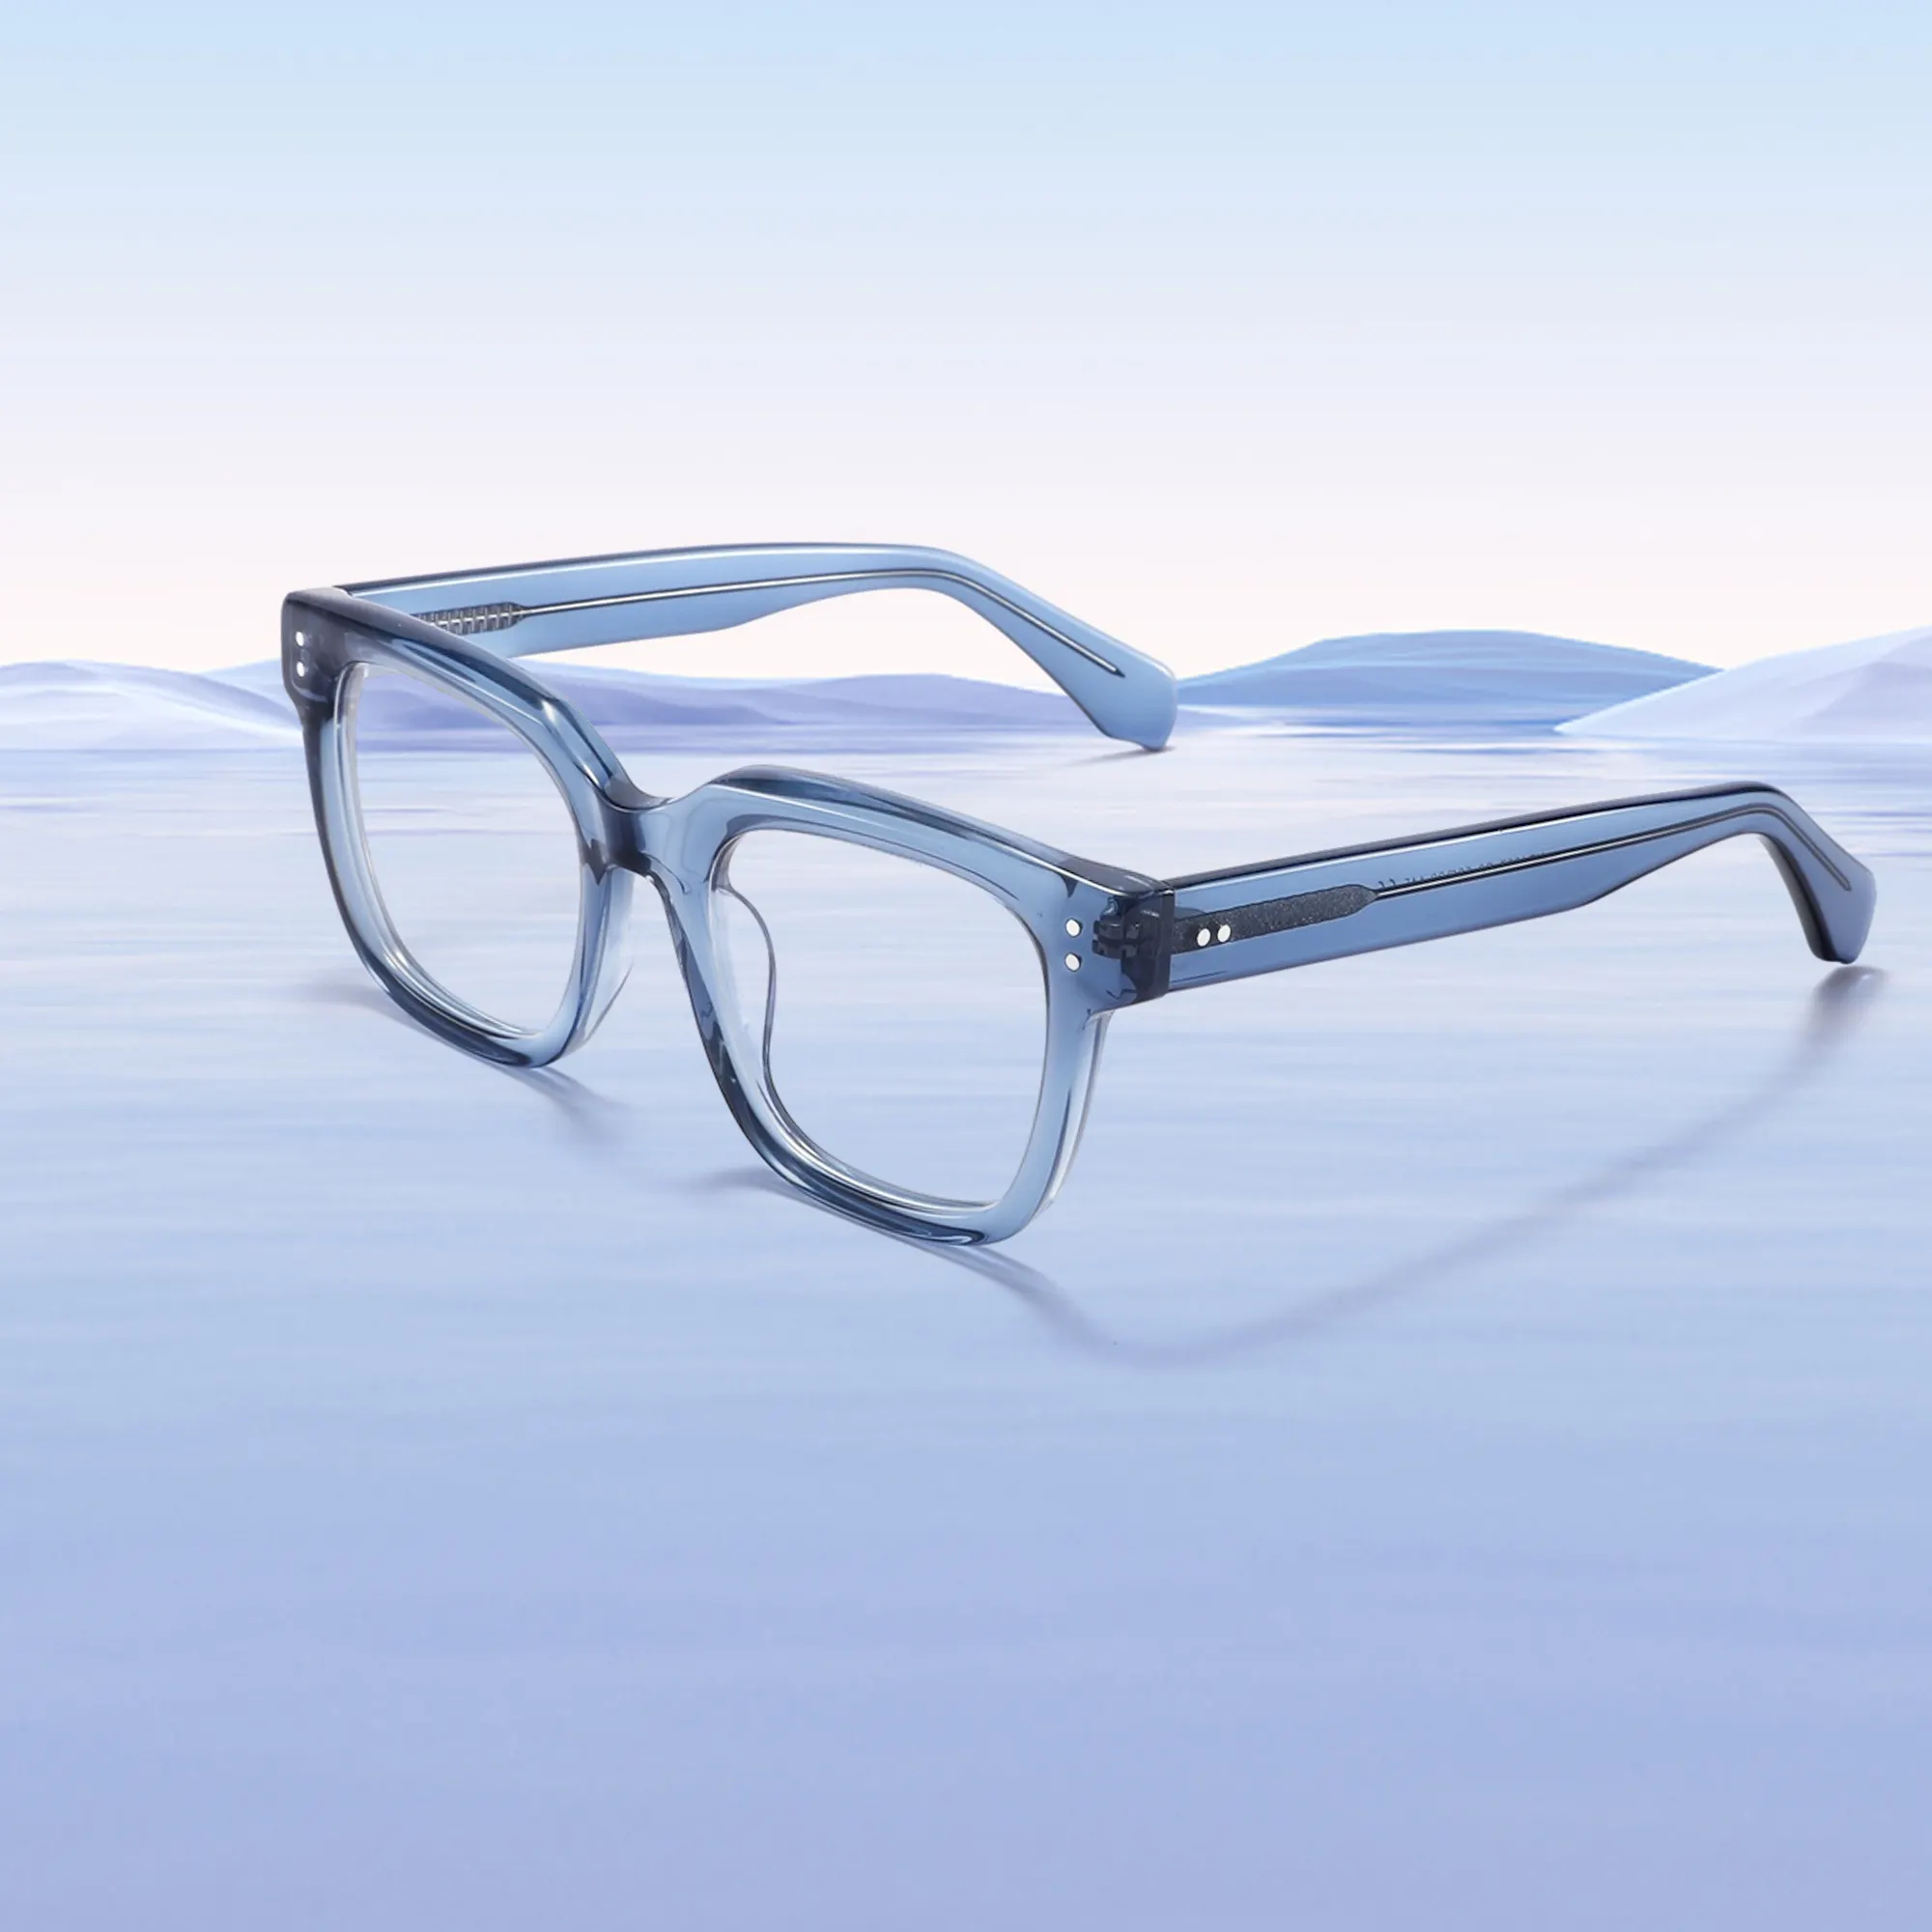 Wholesale Fashion Plate Sunglasses For Women Uv Protection Sunglasses With Polarizing Lens New Optical Eyewear